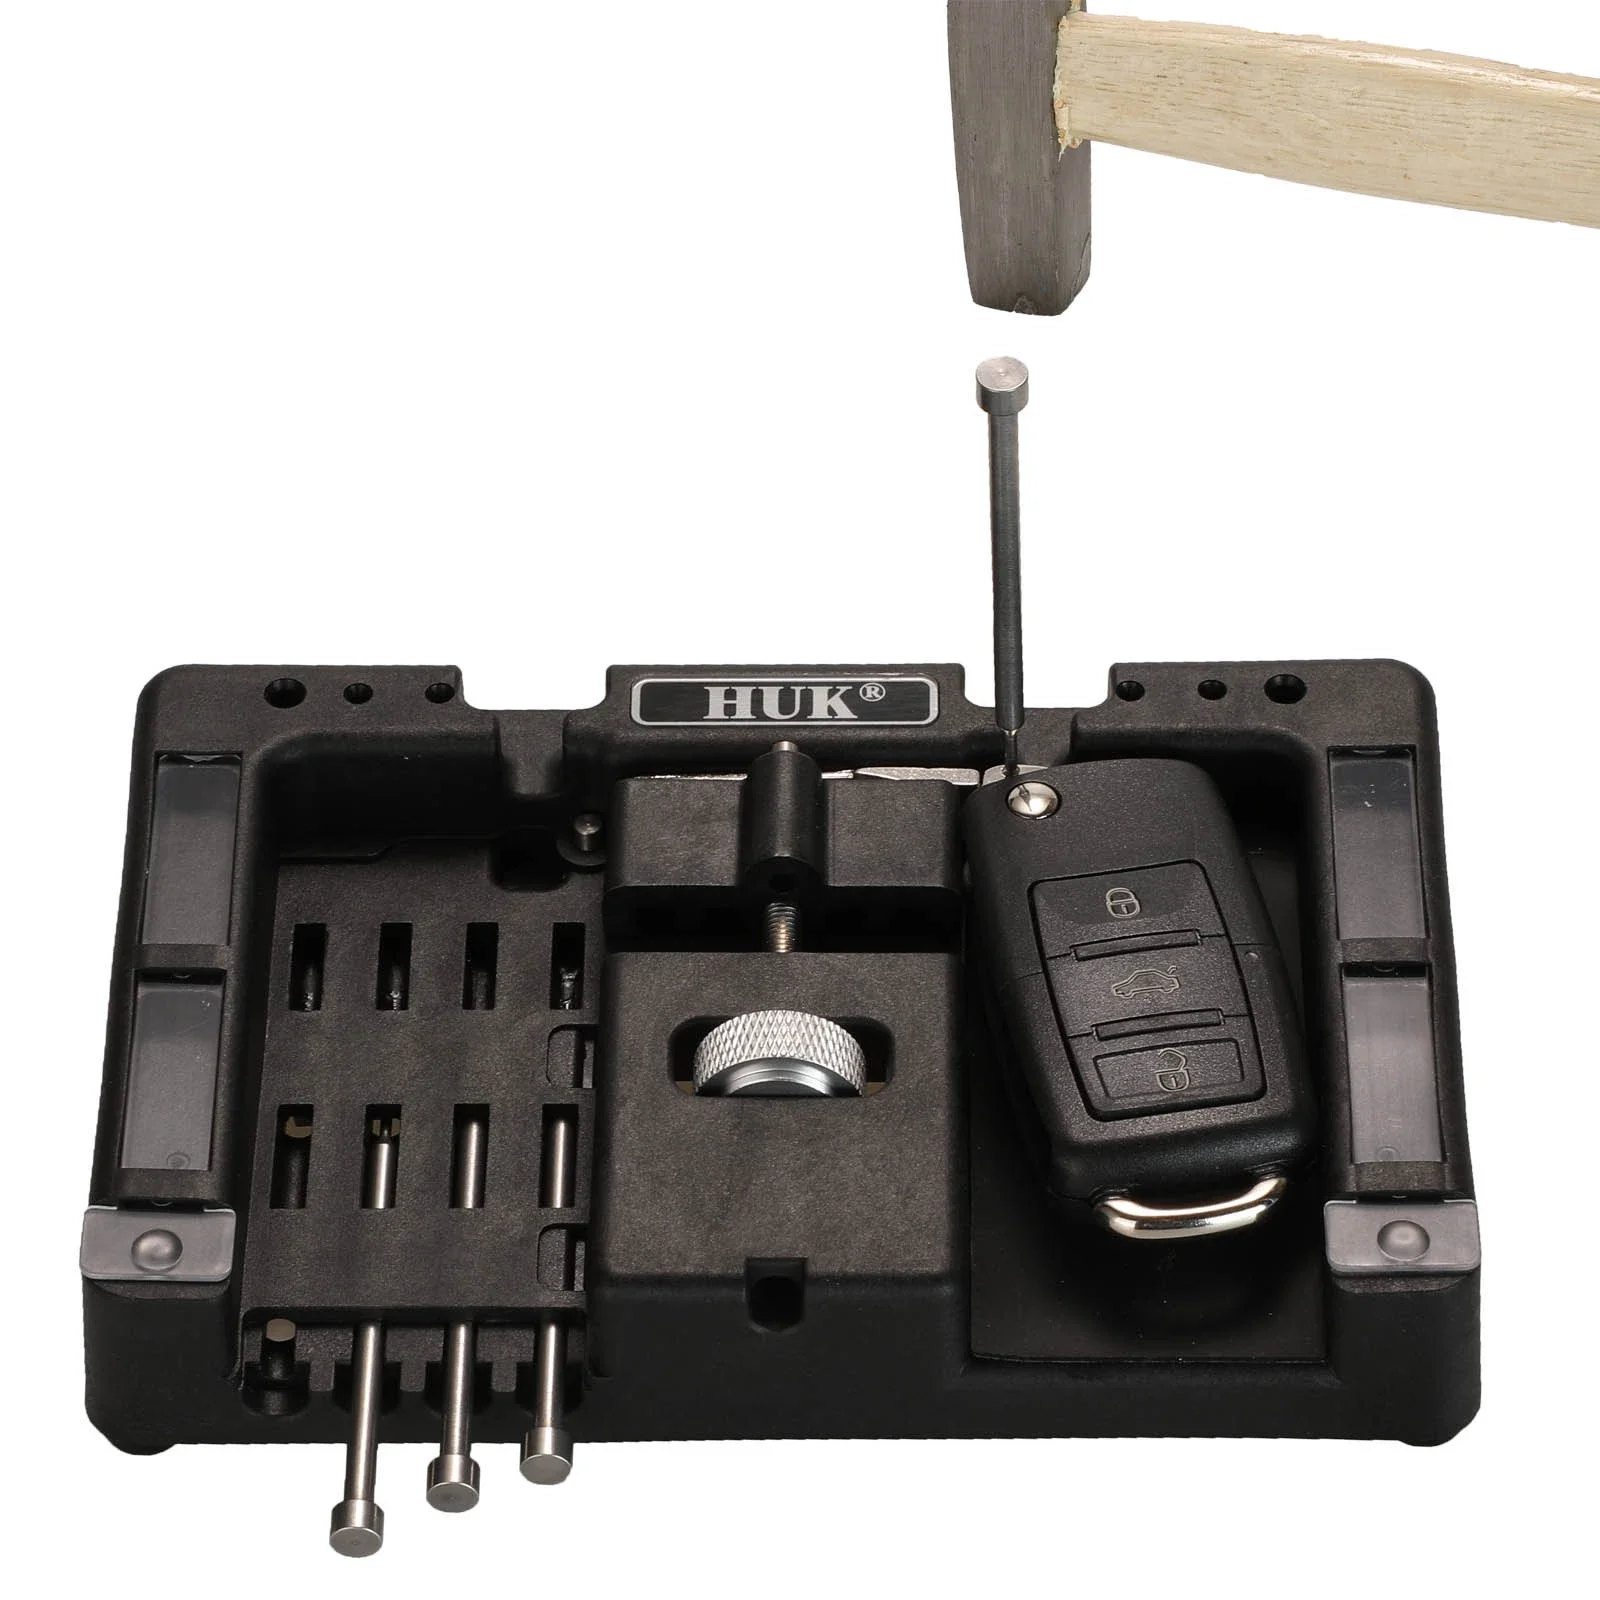 

Original HUK Key Fixing Tool Flip Key Vice Of Flip-key Pin Remover for Locksmith Tools With Four Pins